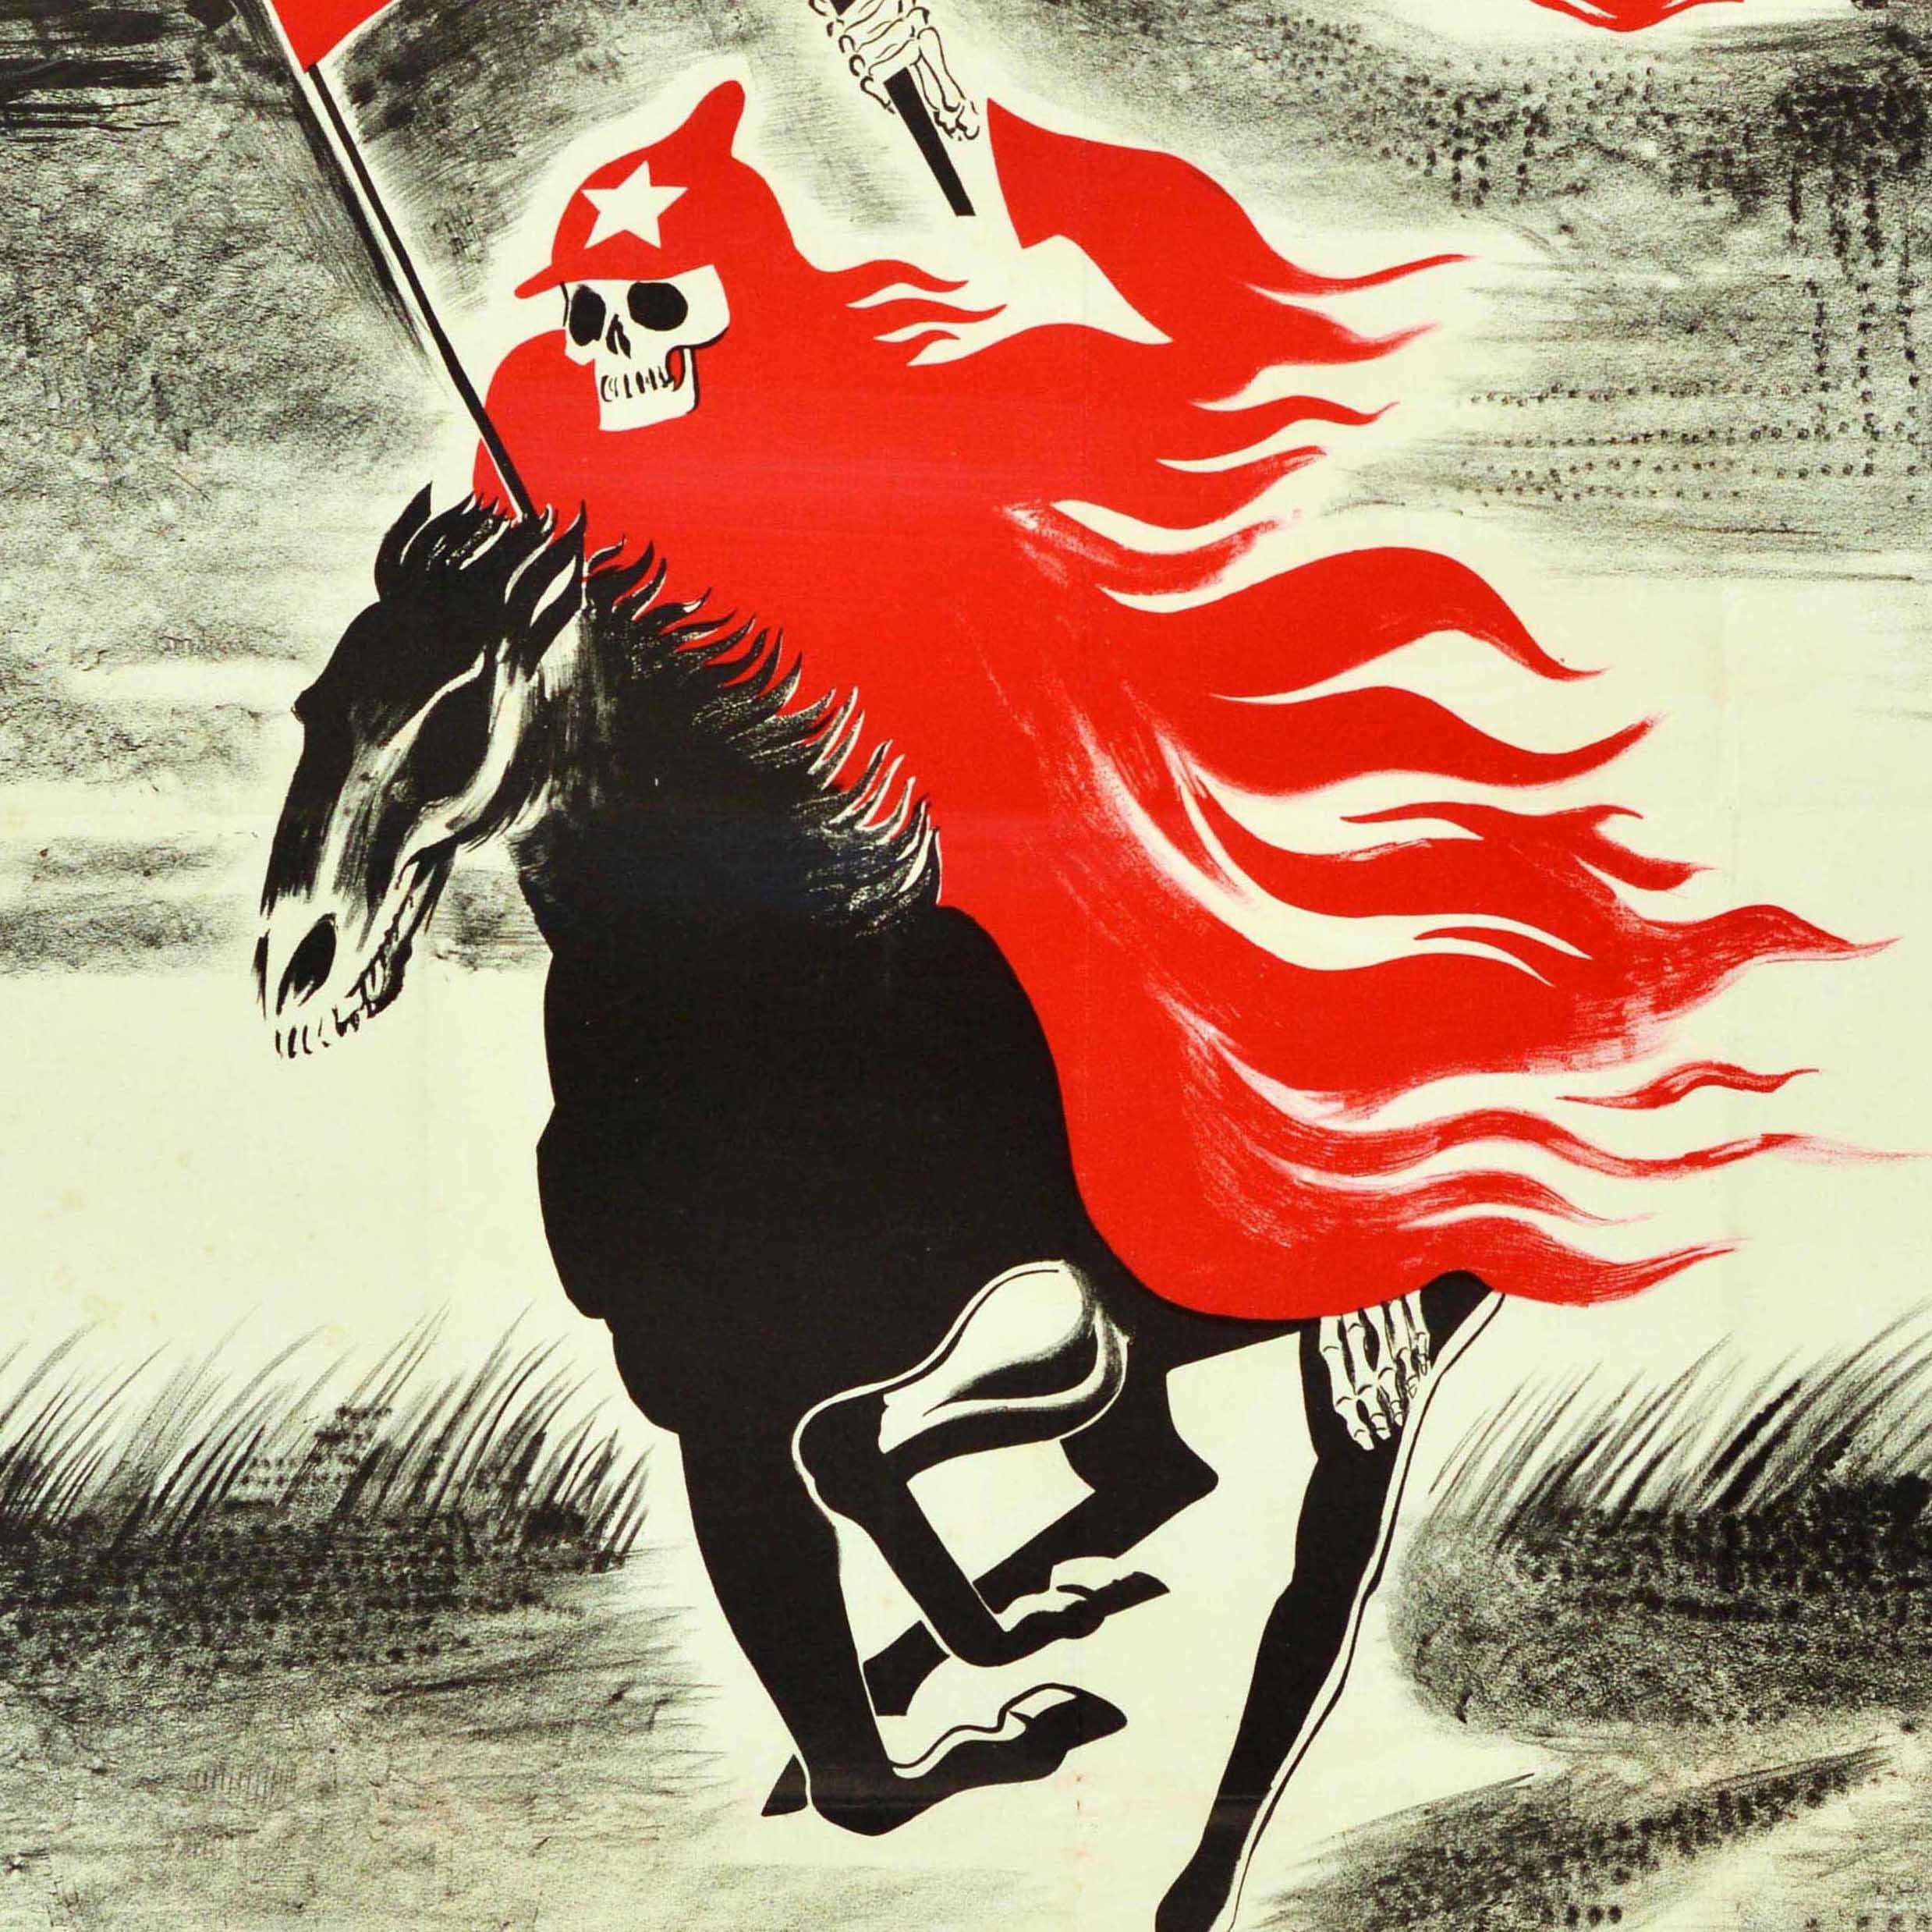 Original Vintage Dutch Election Propaganda Poster Communism Terror And Slavery - Print by Unknown